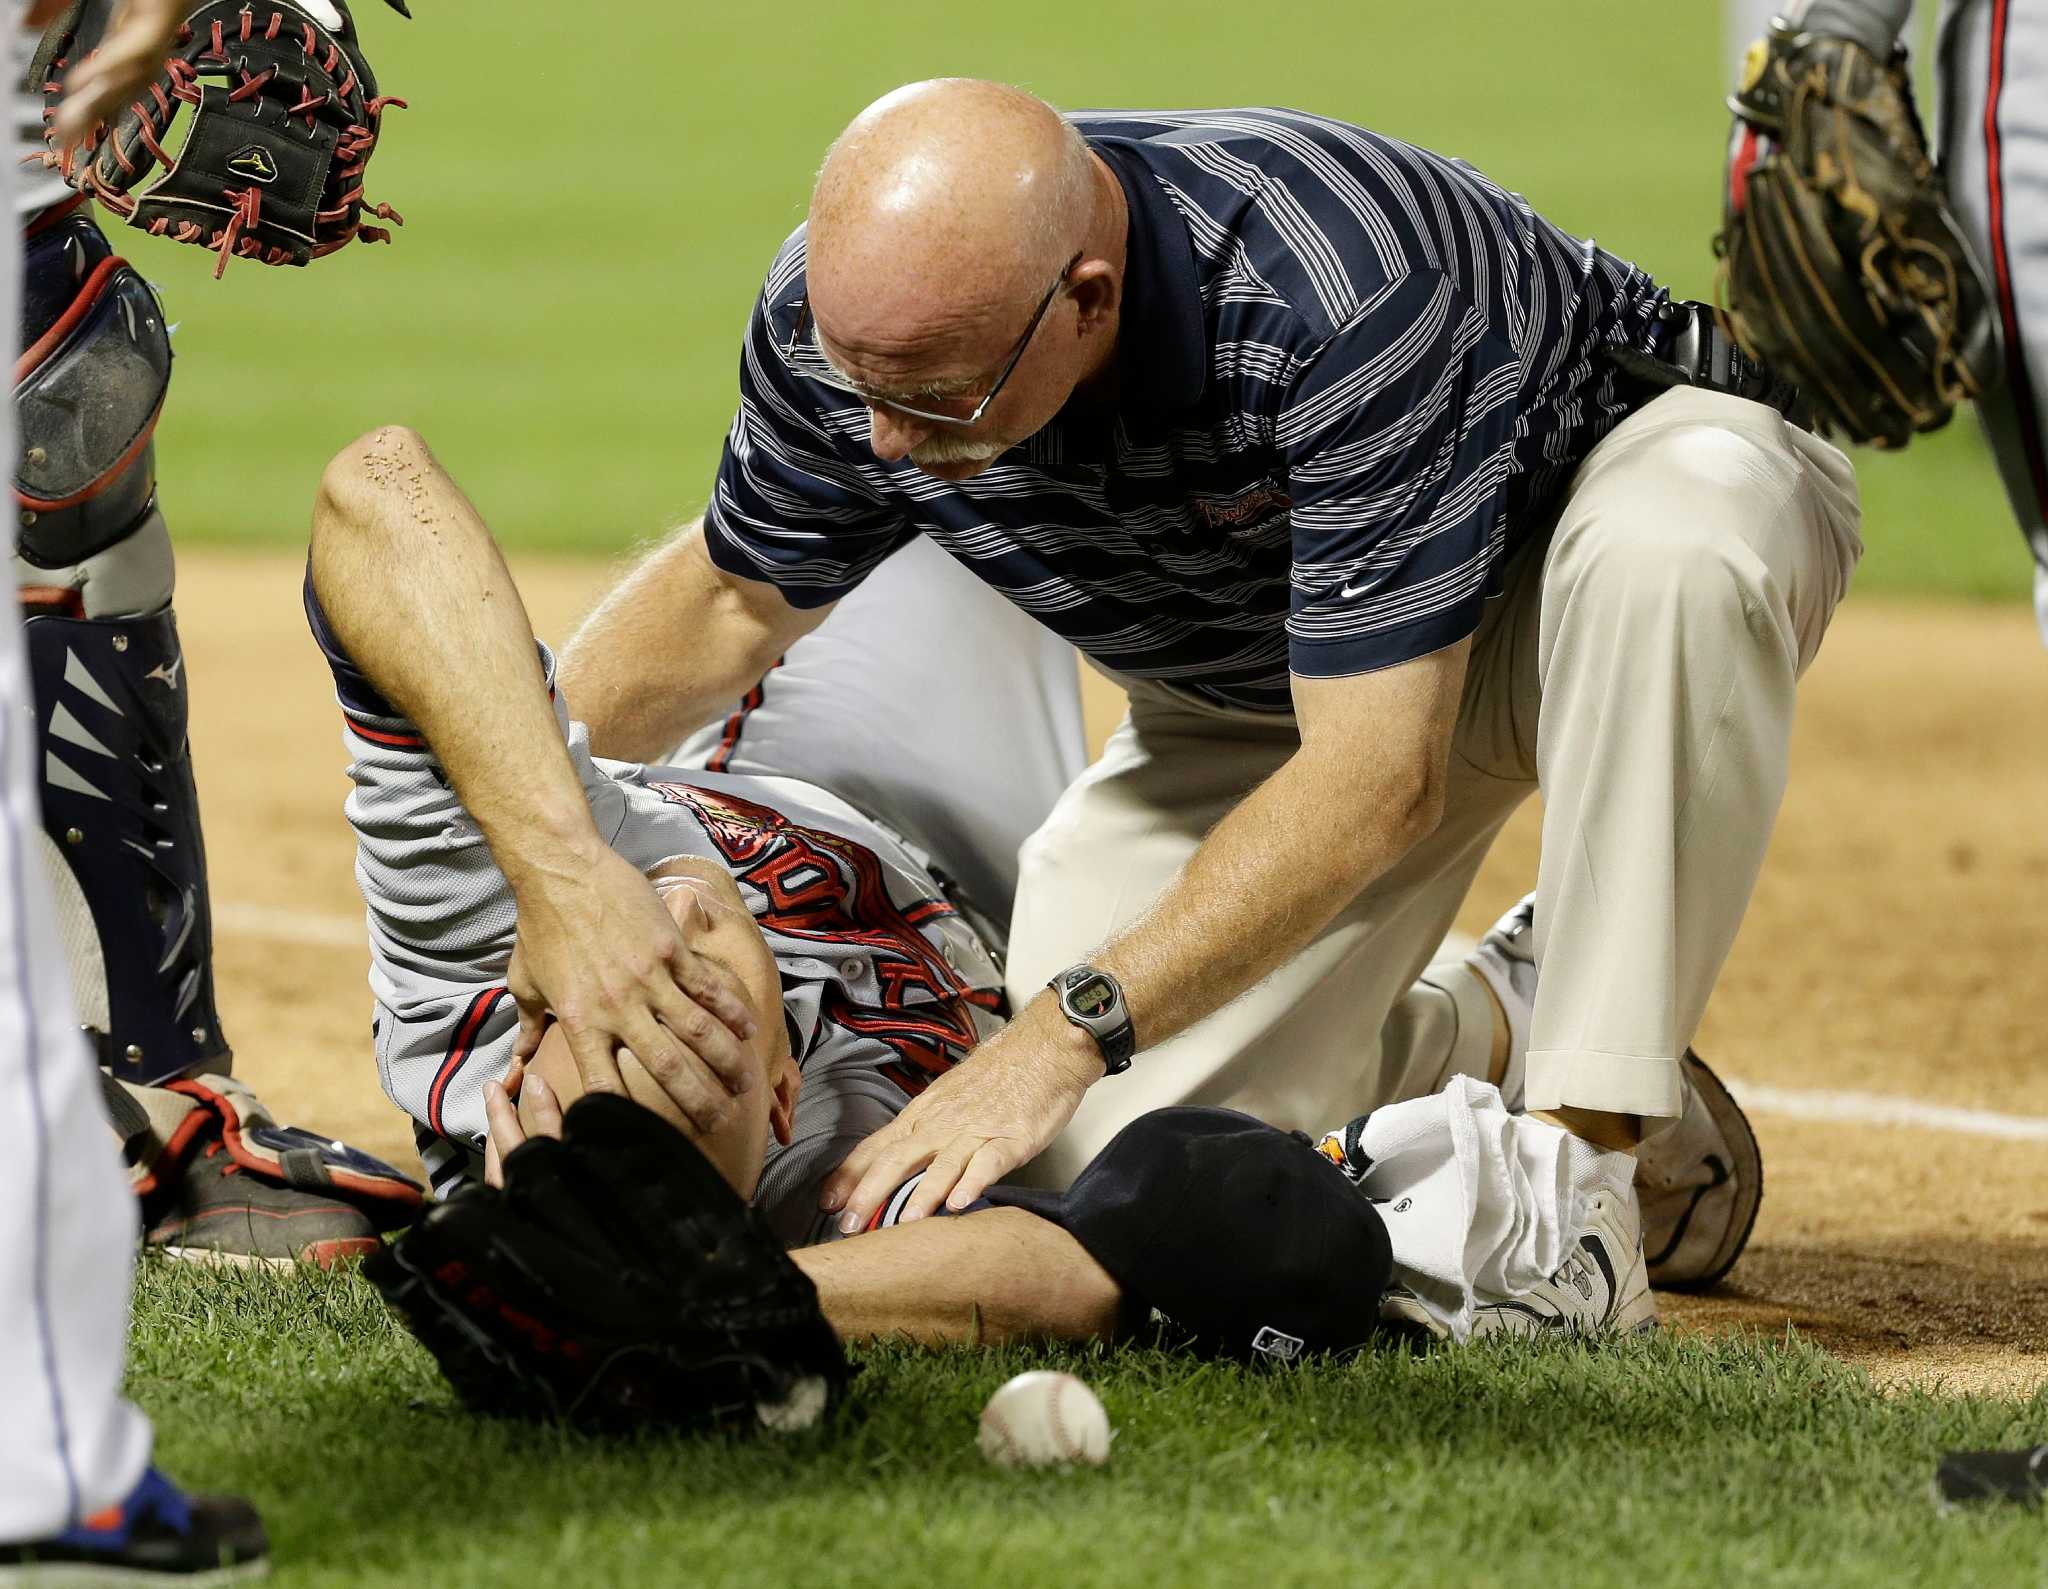 Braves' Tim Hudson (broken ankle) out for season - Newsday